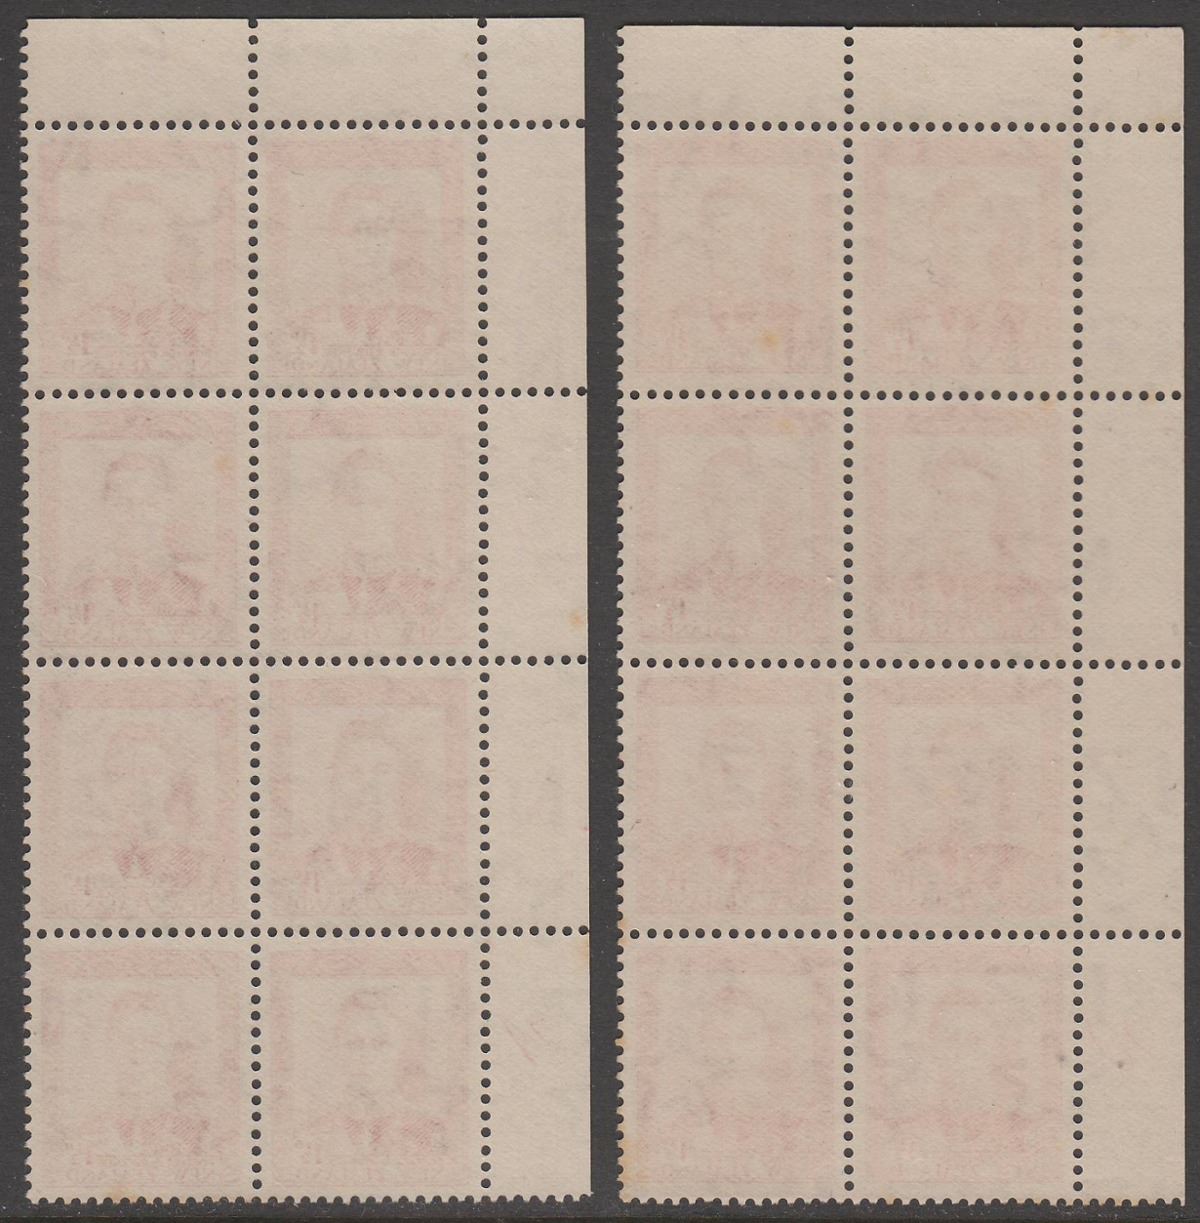 New Zealand 1944 KGVI 1½d Scarlet Plates 20, 21 Imprint Blocks of 8 Mint SG608